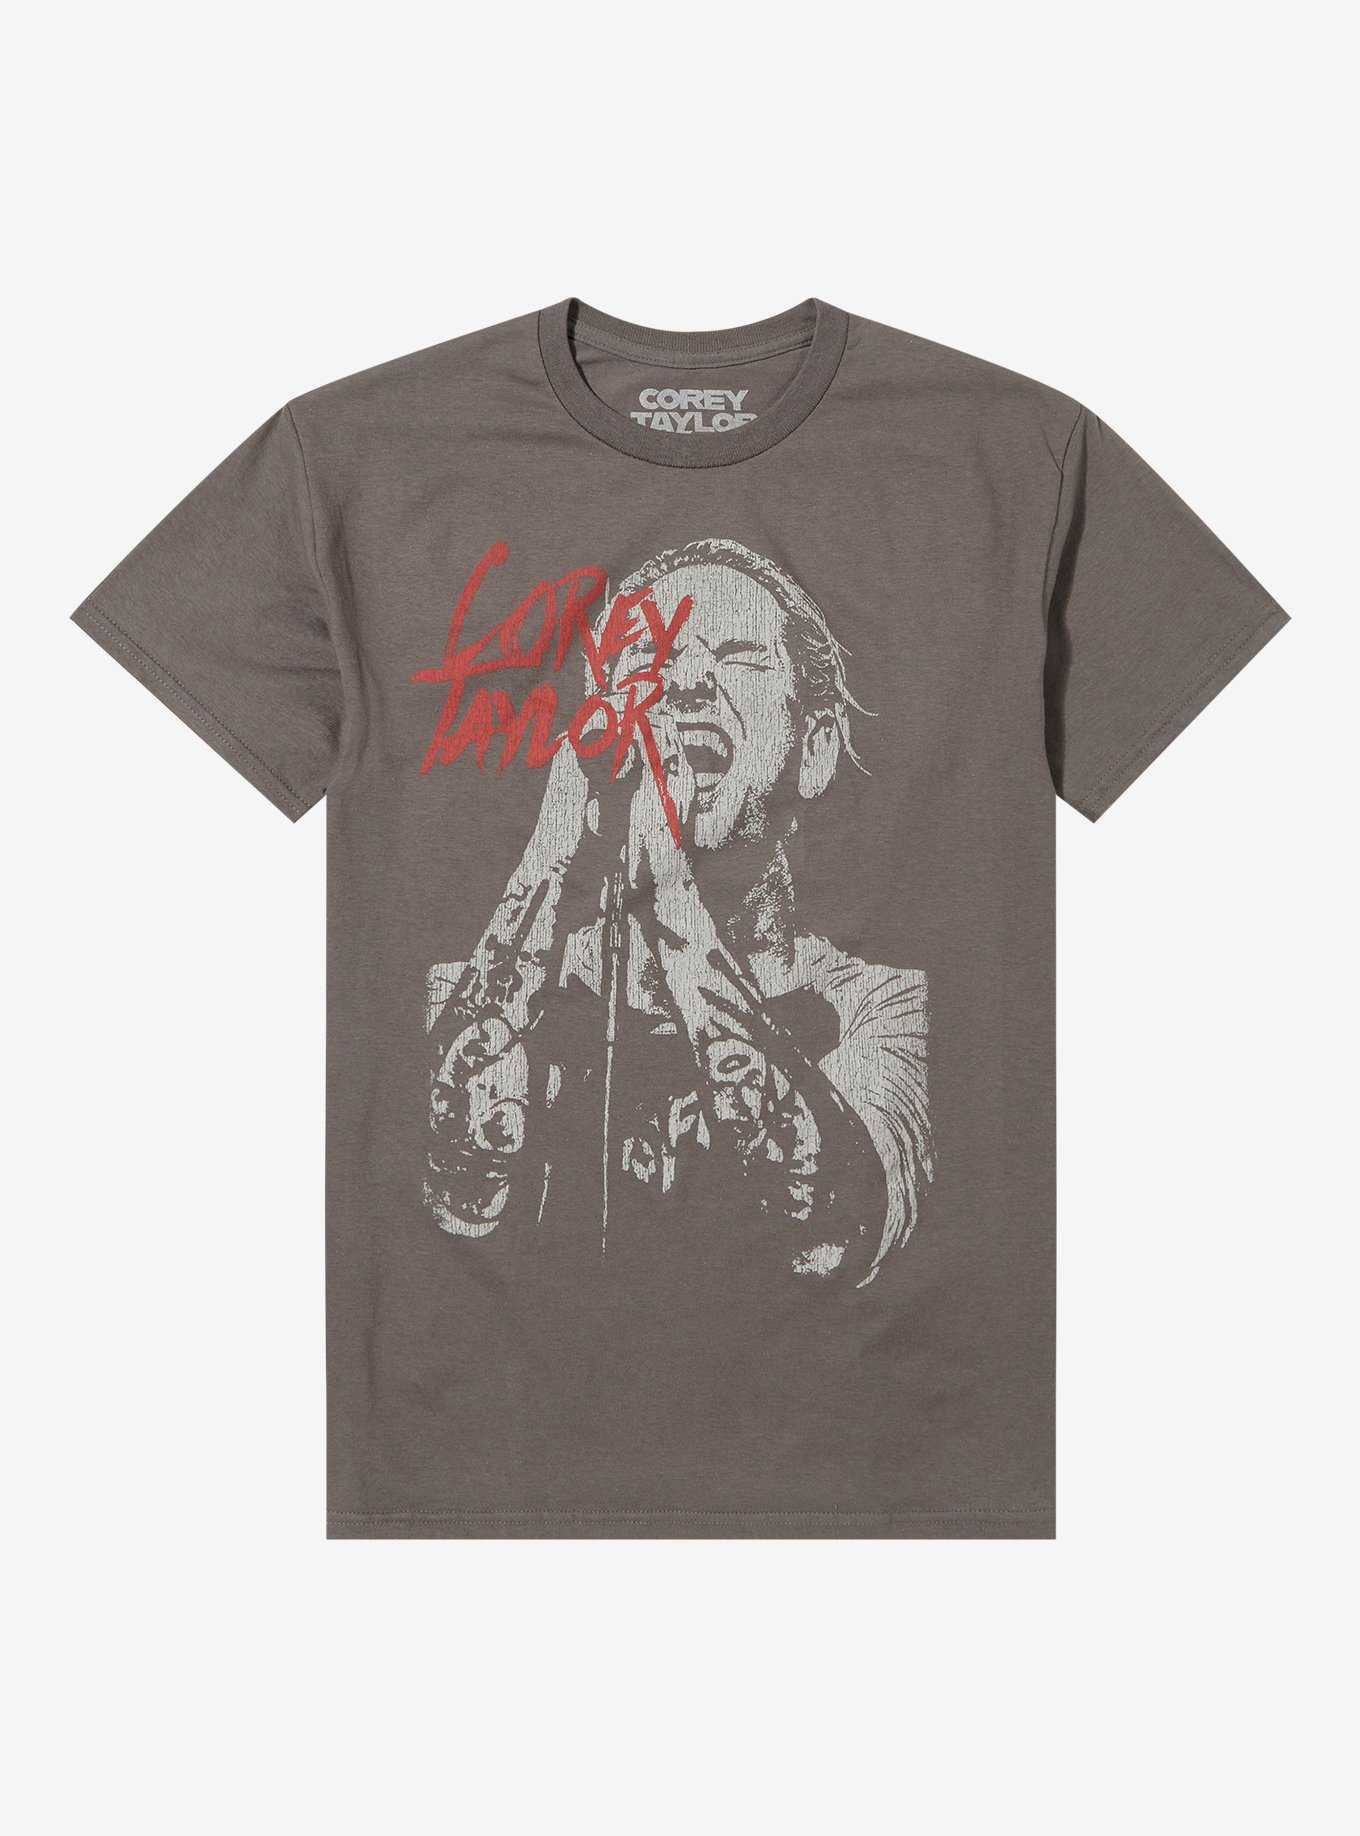 Corey Taylor Singing Boyfriend Fit Girls T-Shirt, , hi-res